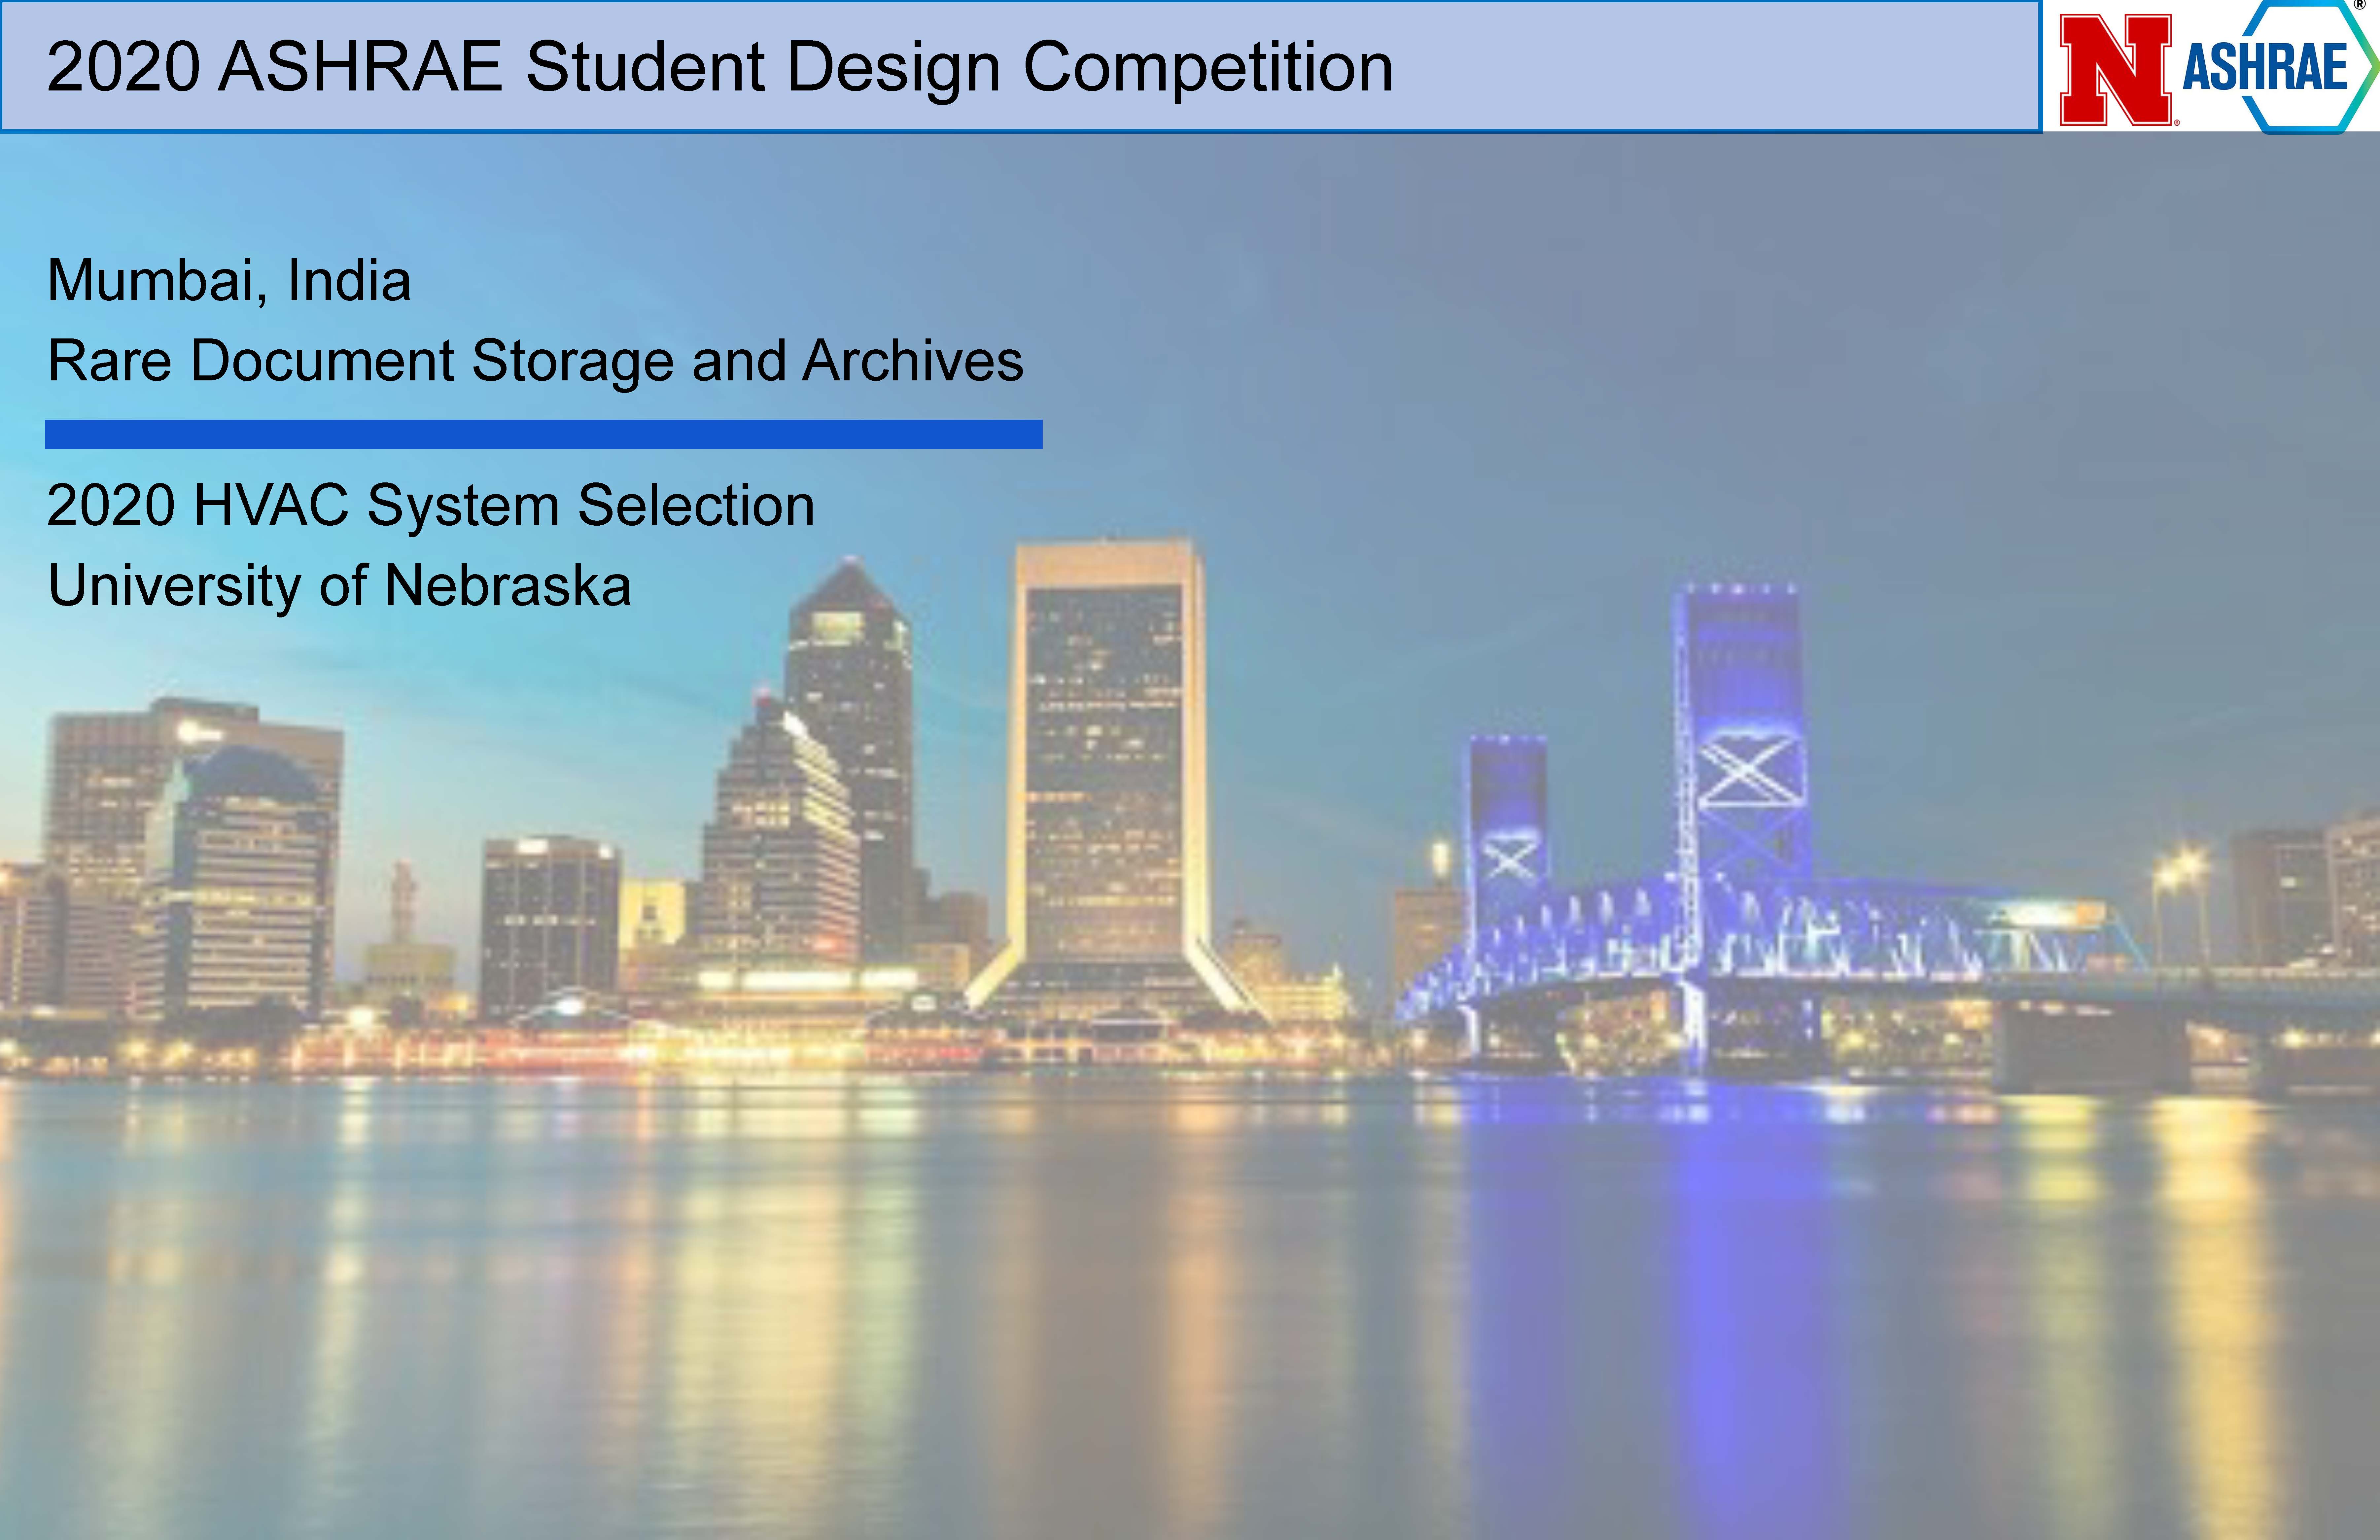 ASHRAE student design competition winners